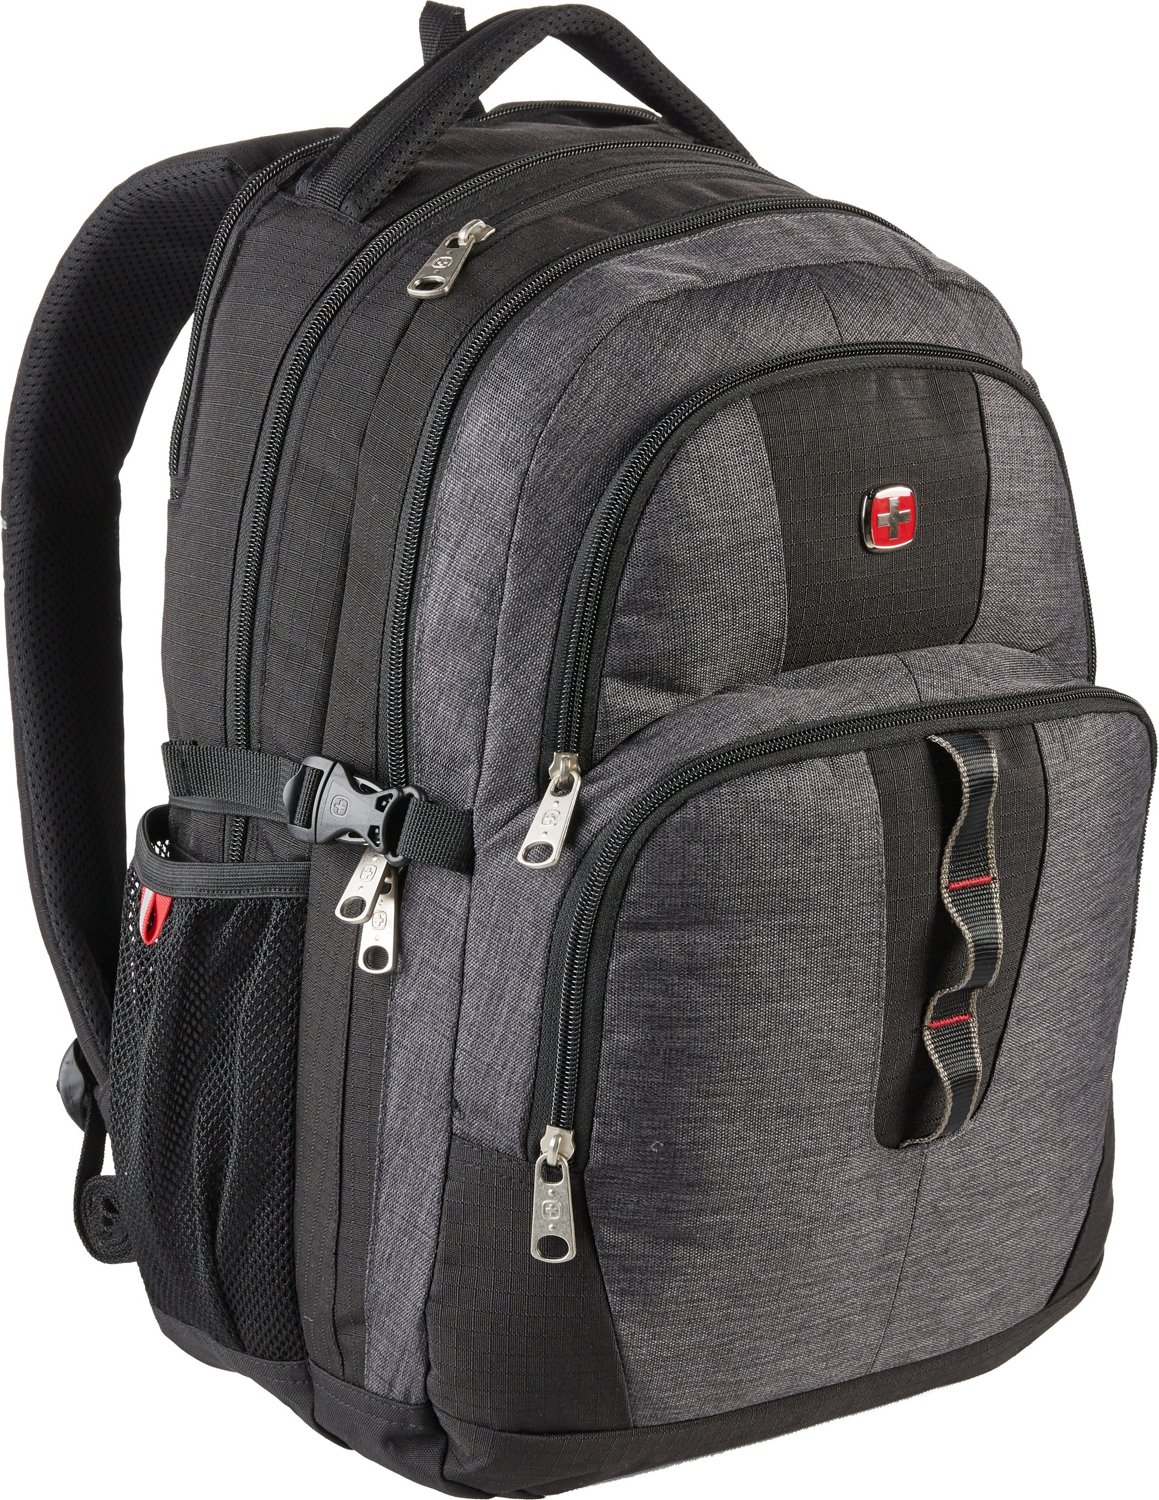 SwissGear 3973 Laptop Backpack | Academy